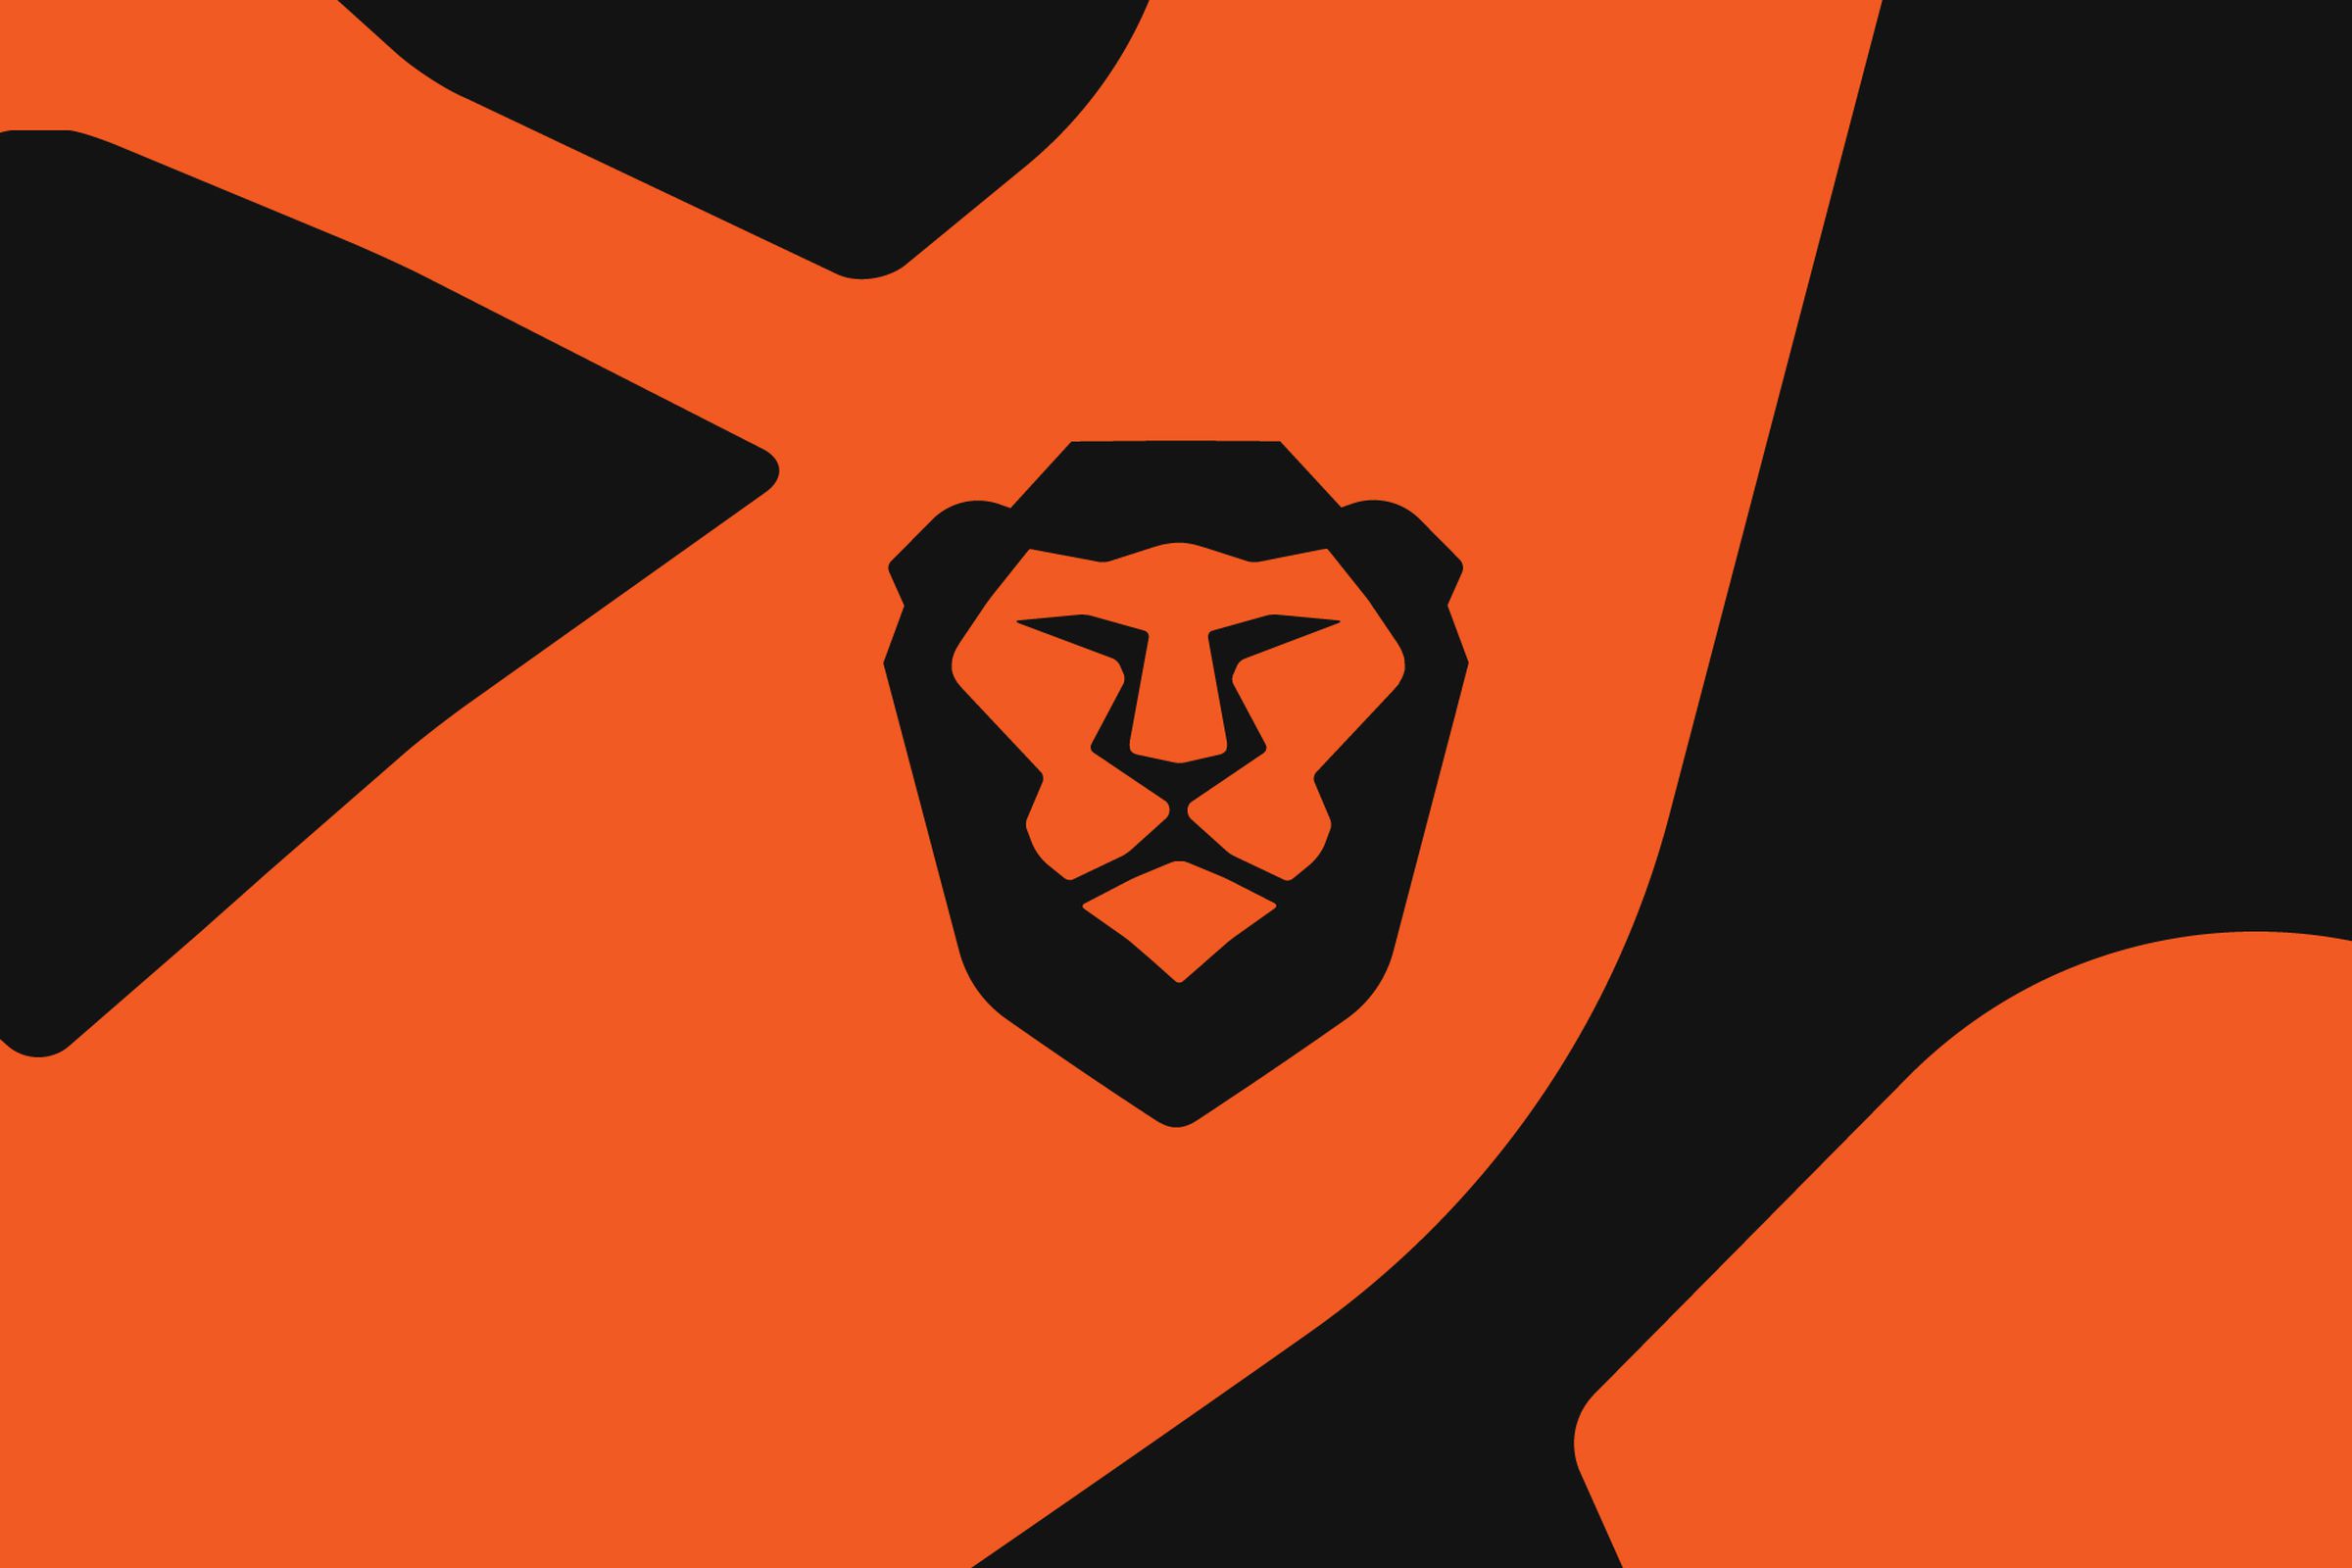 The Brave logo on an orange and black backdrop.